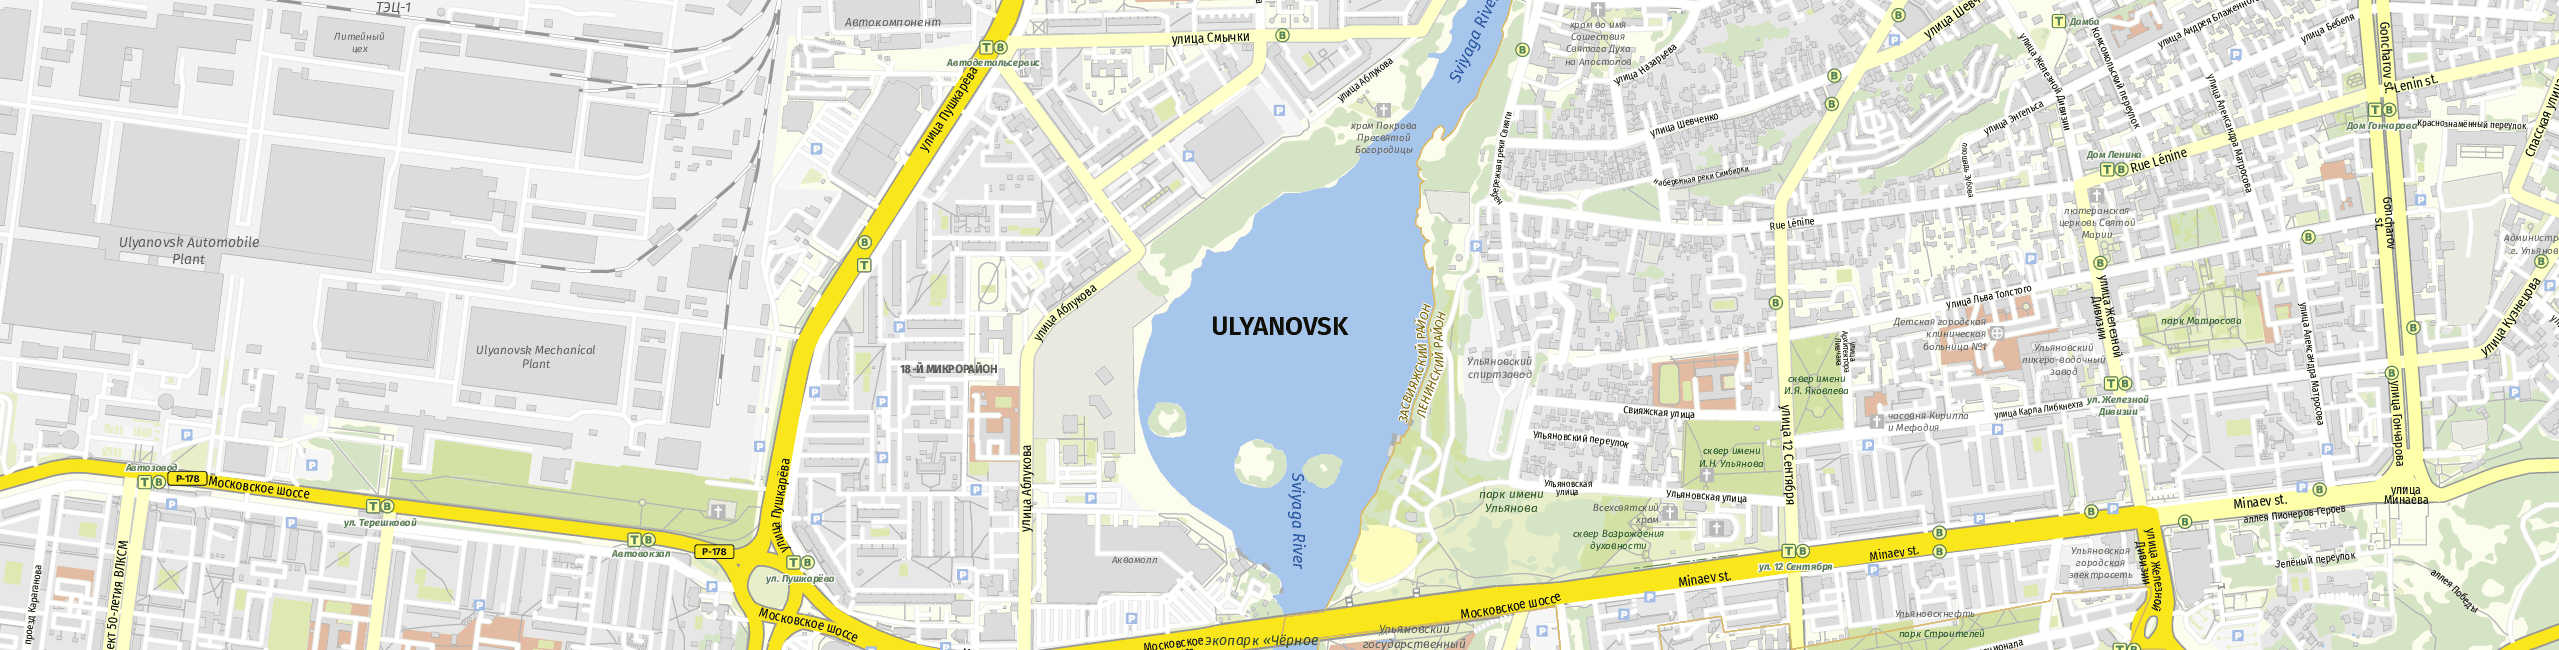 Stadtplan Ulyanovsk zum Downloaden.